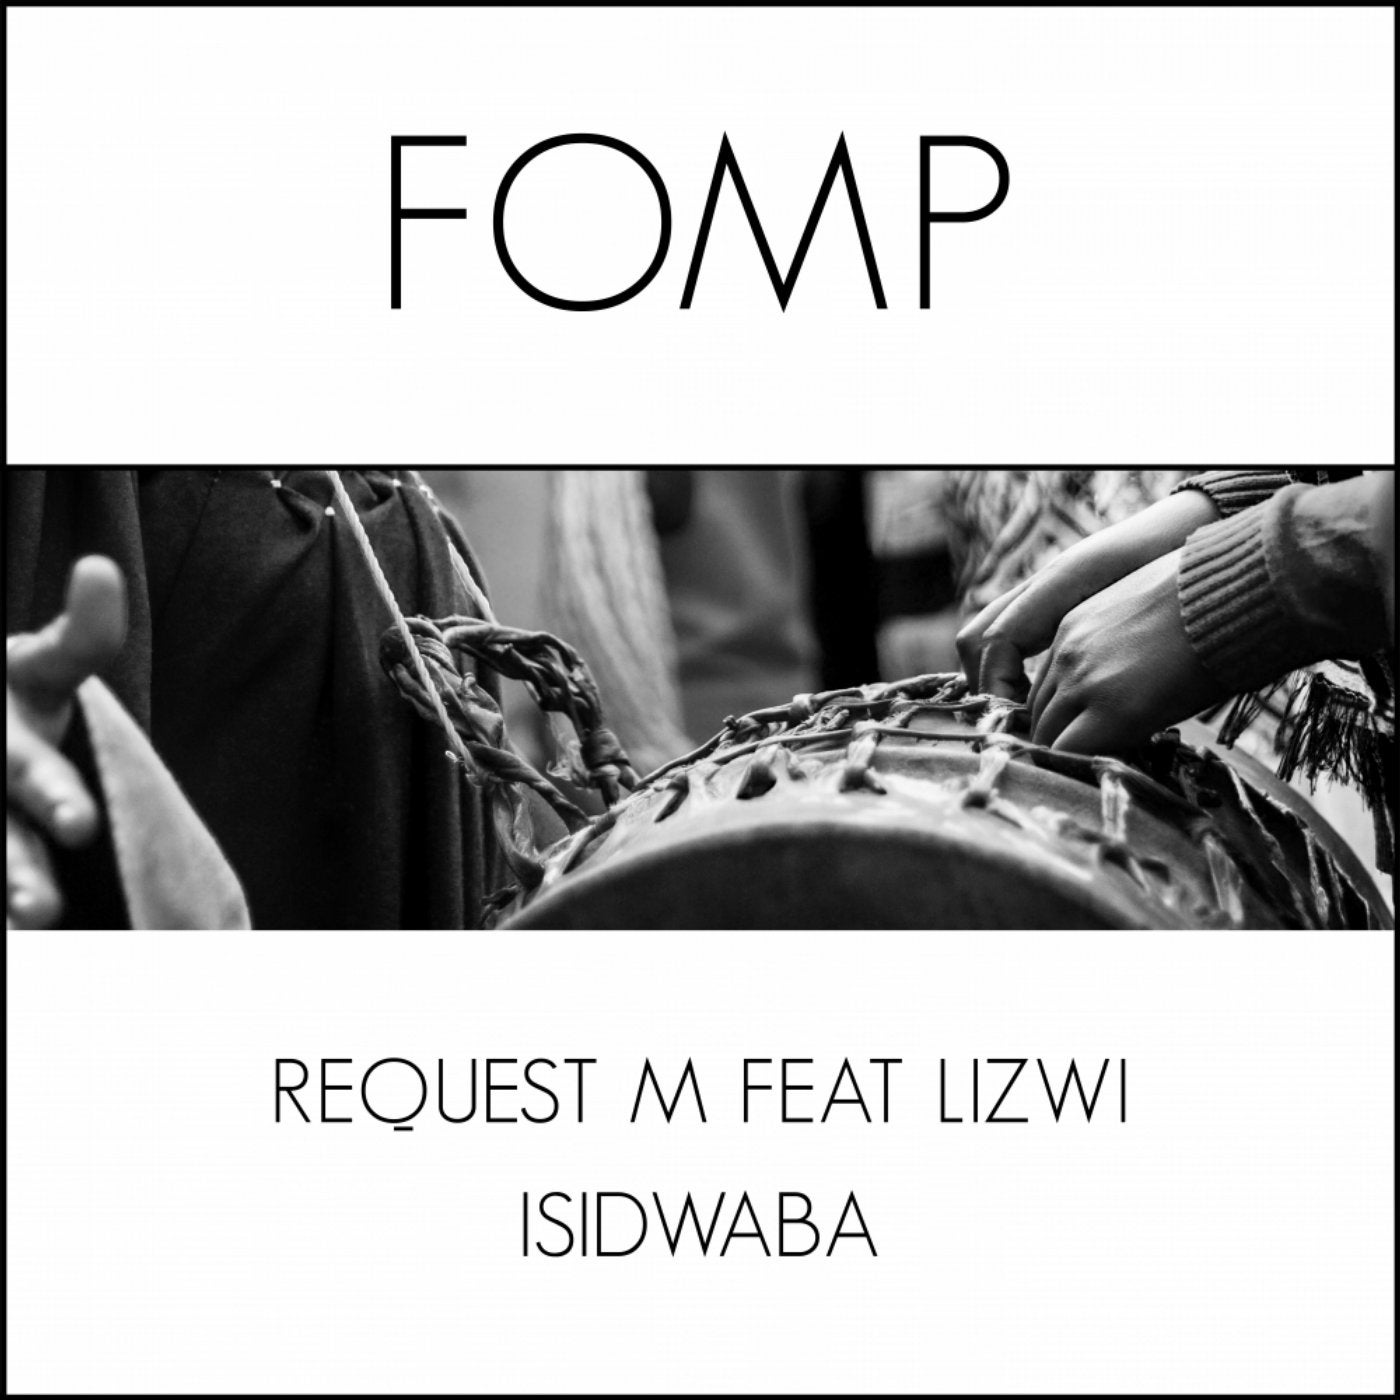 Joezi Lizwi. Waves & WAVS (feat. Lizwi) от Ahmed Spins. Joezi, Lizwi - Amathole (Original Mix). Zolalela (feat. Lizwi) [Amine k Remix].